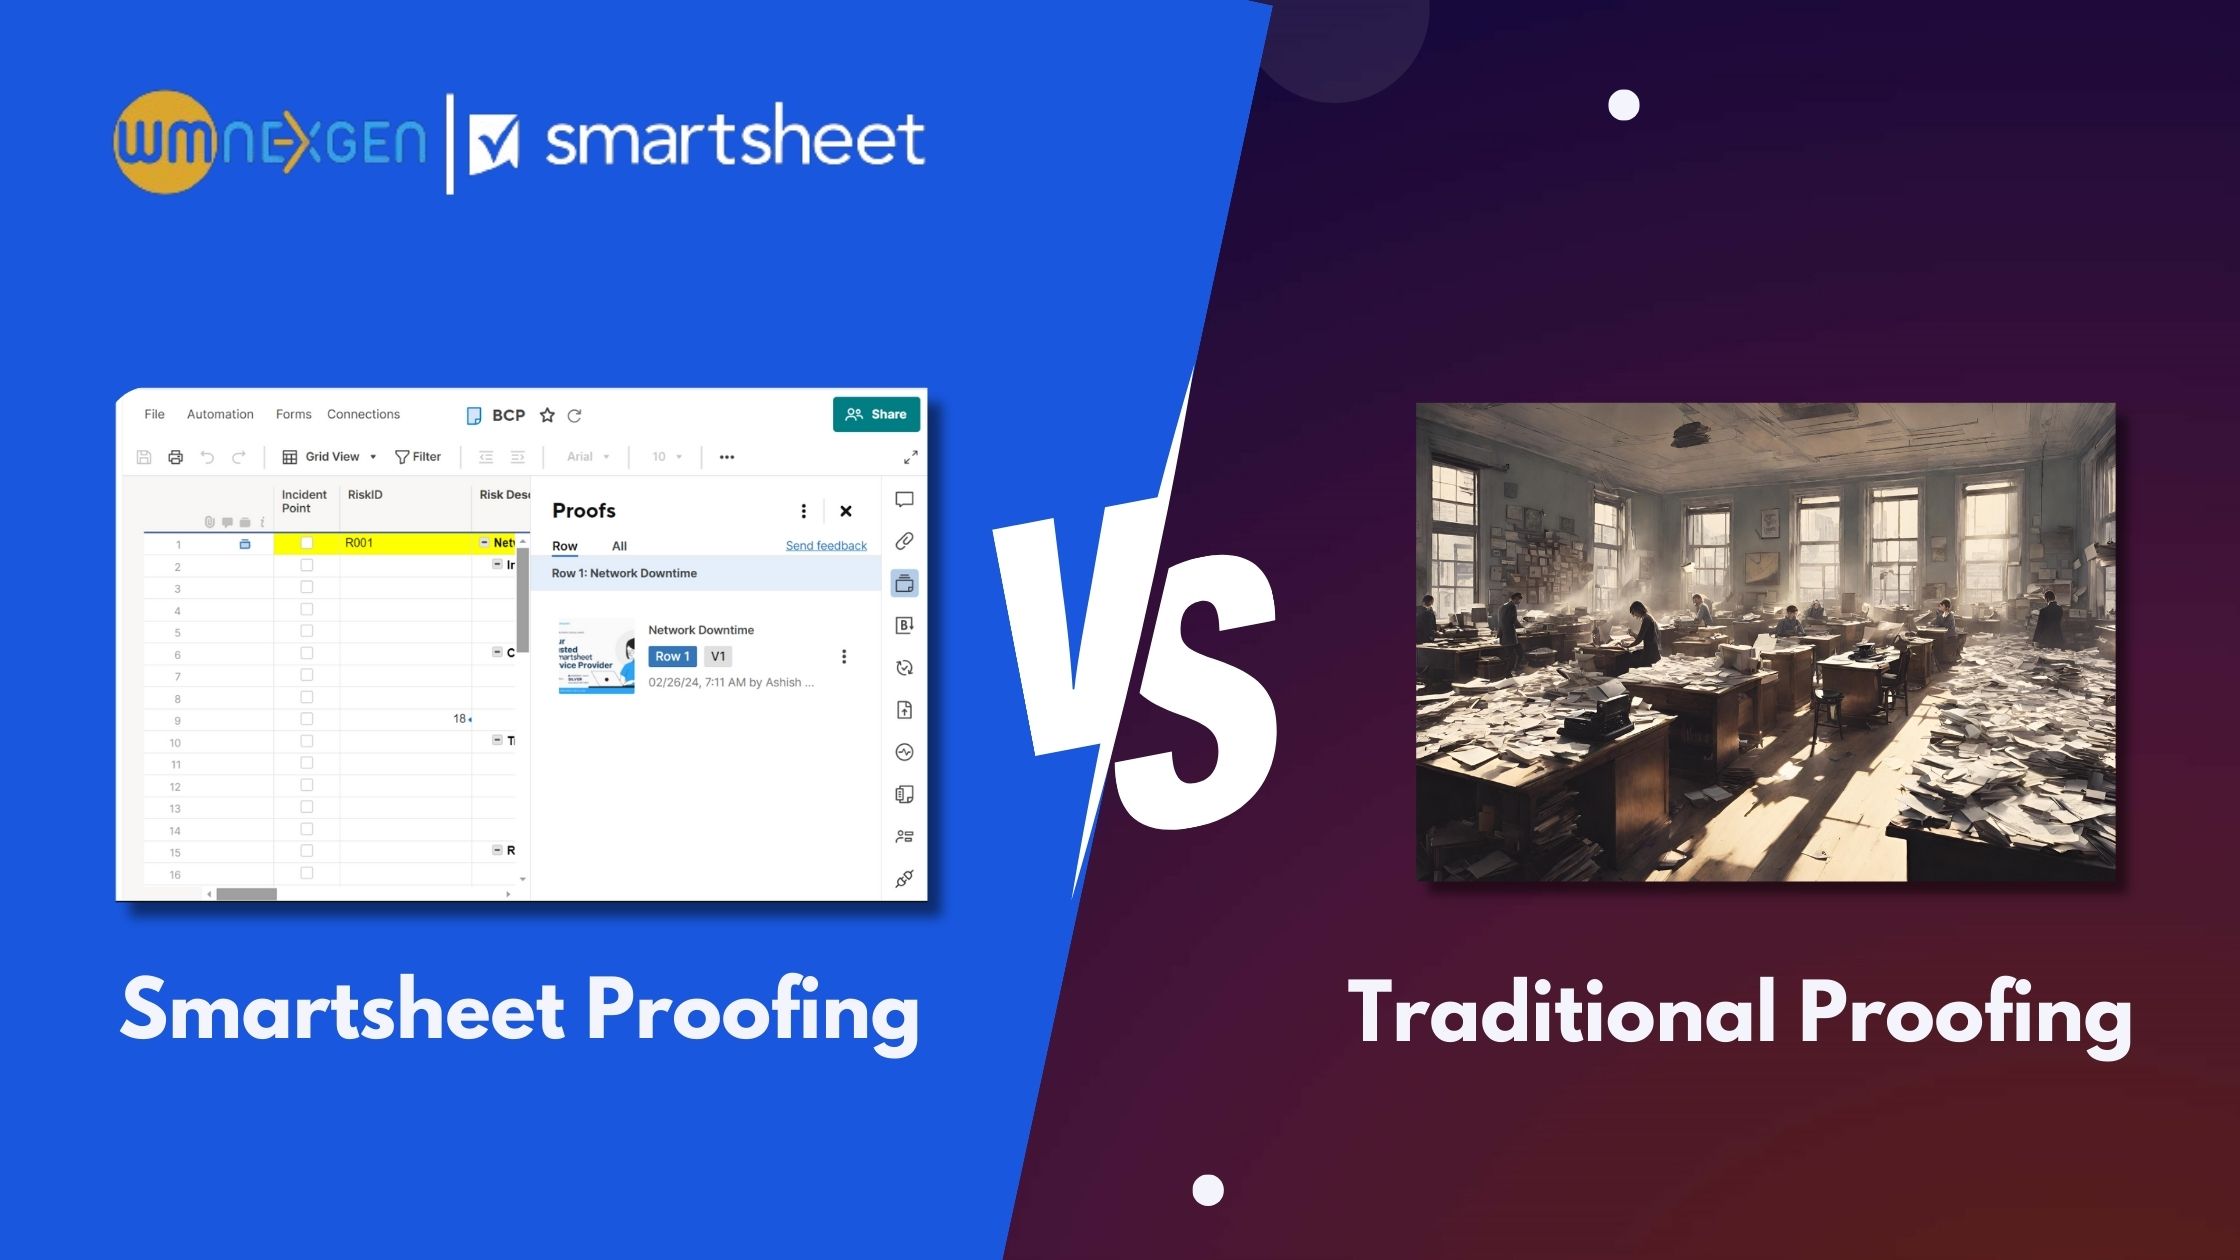 Smartsheet Profing vs Traditional Proofing